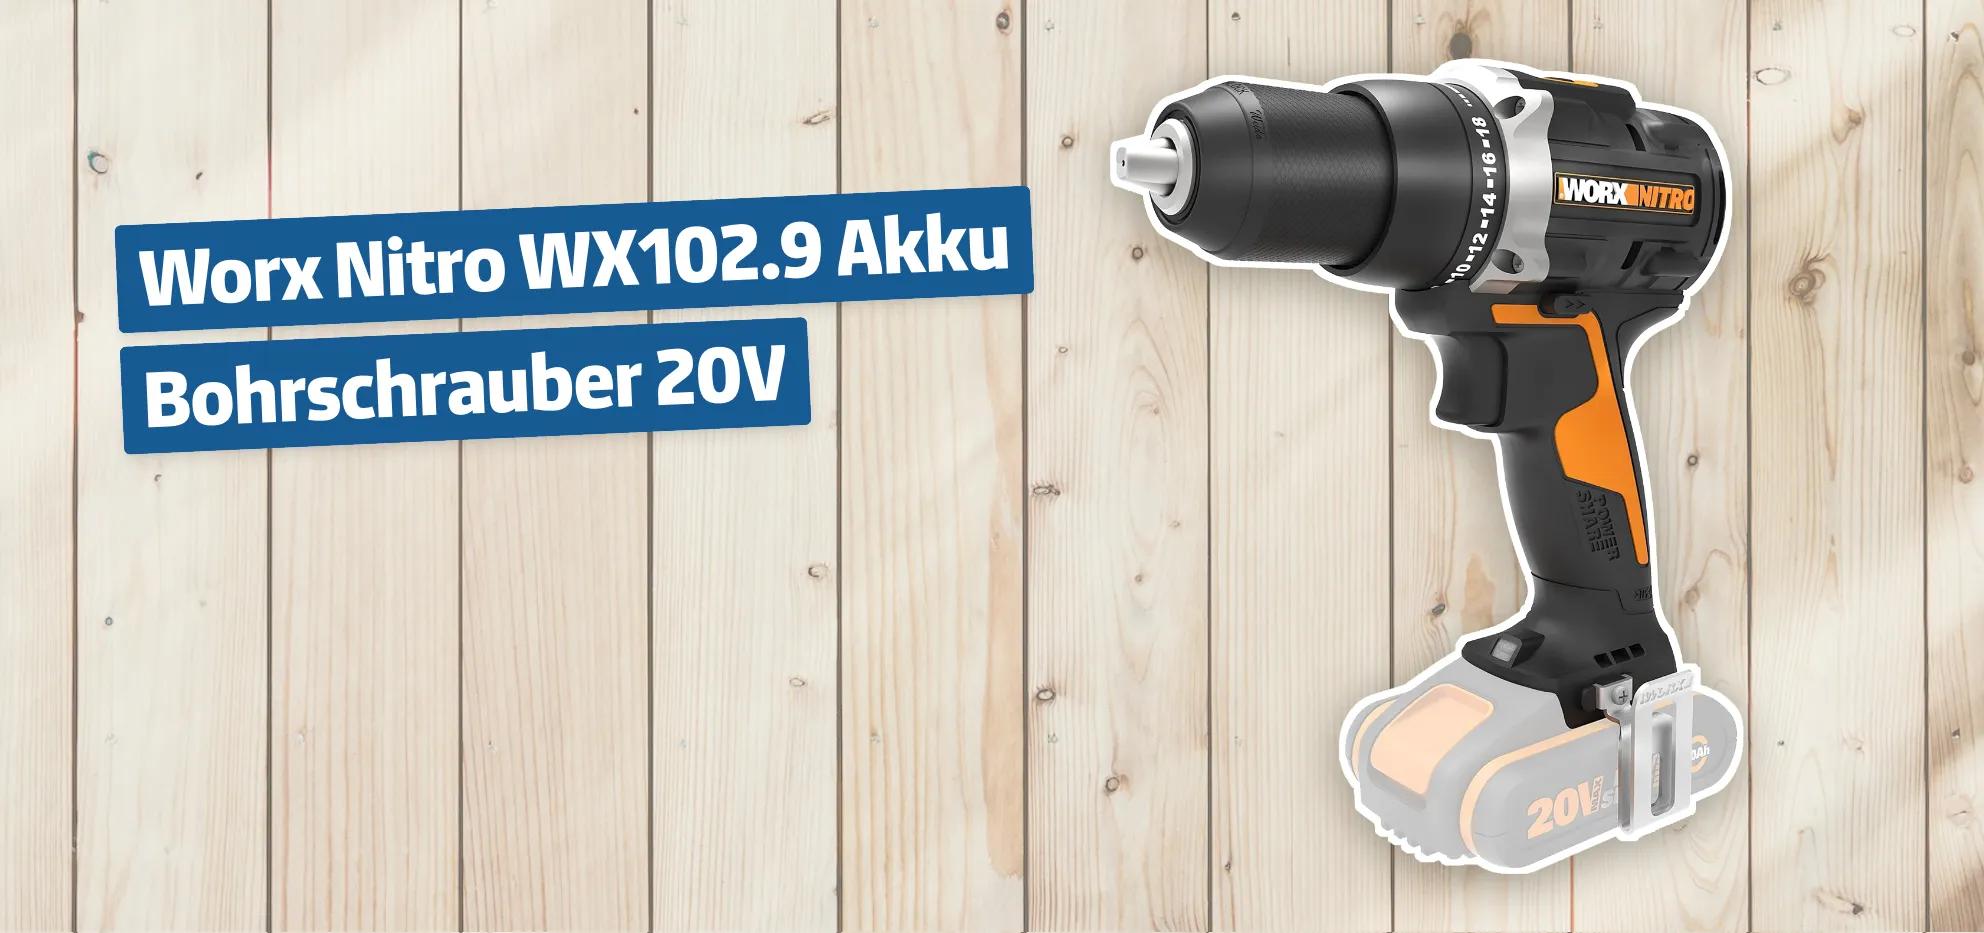 Worx Nitro WX102.9 Akku Bohrschrauber 20V